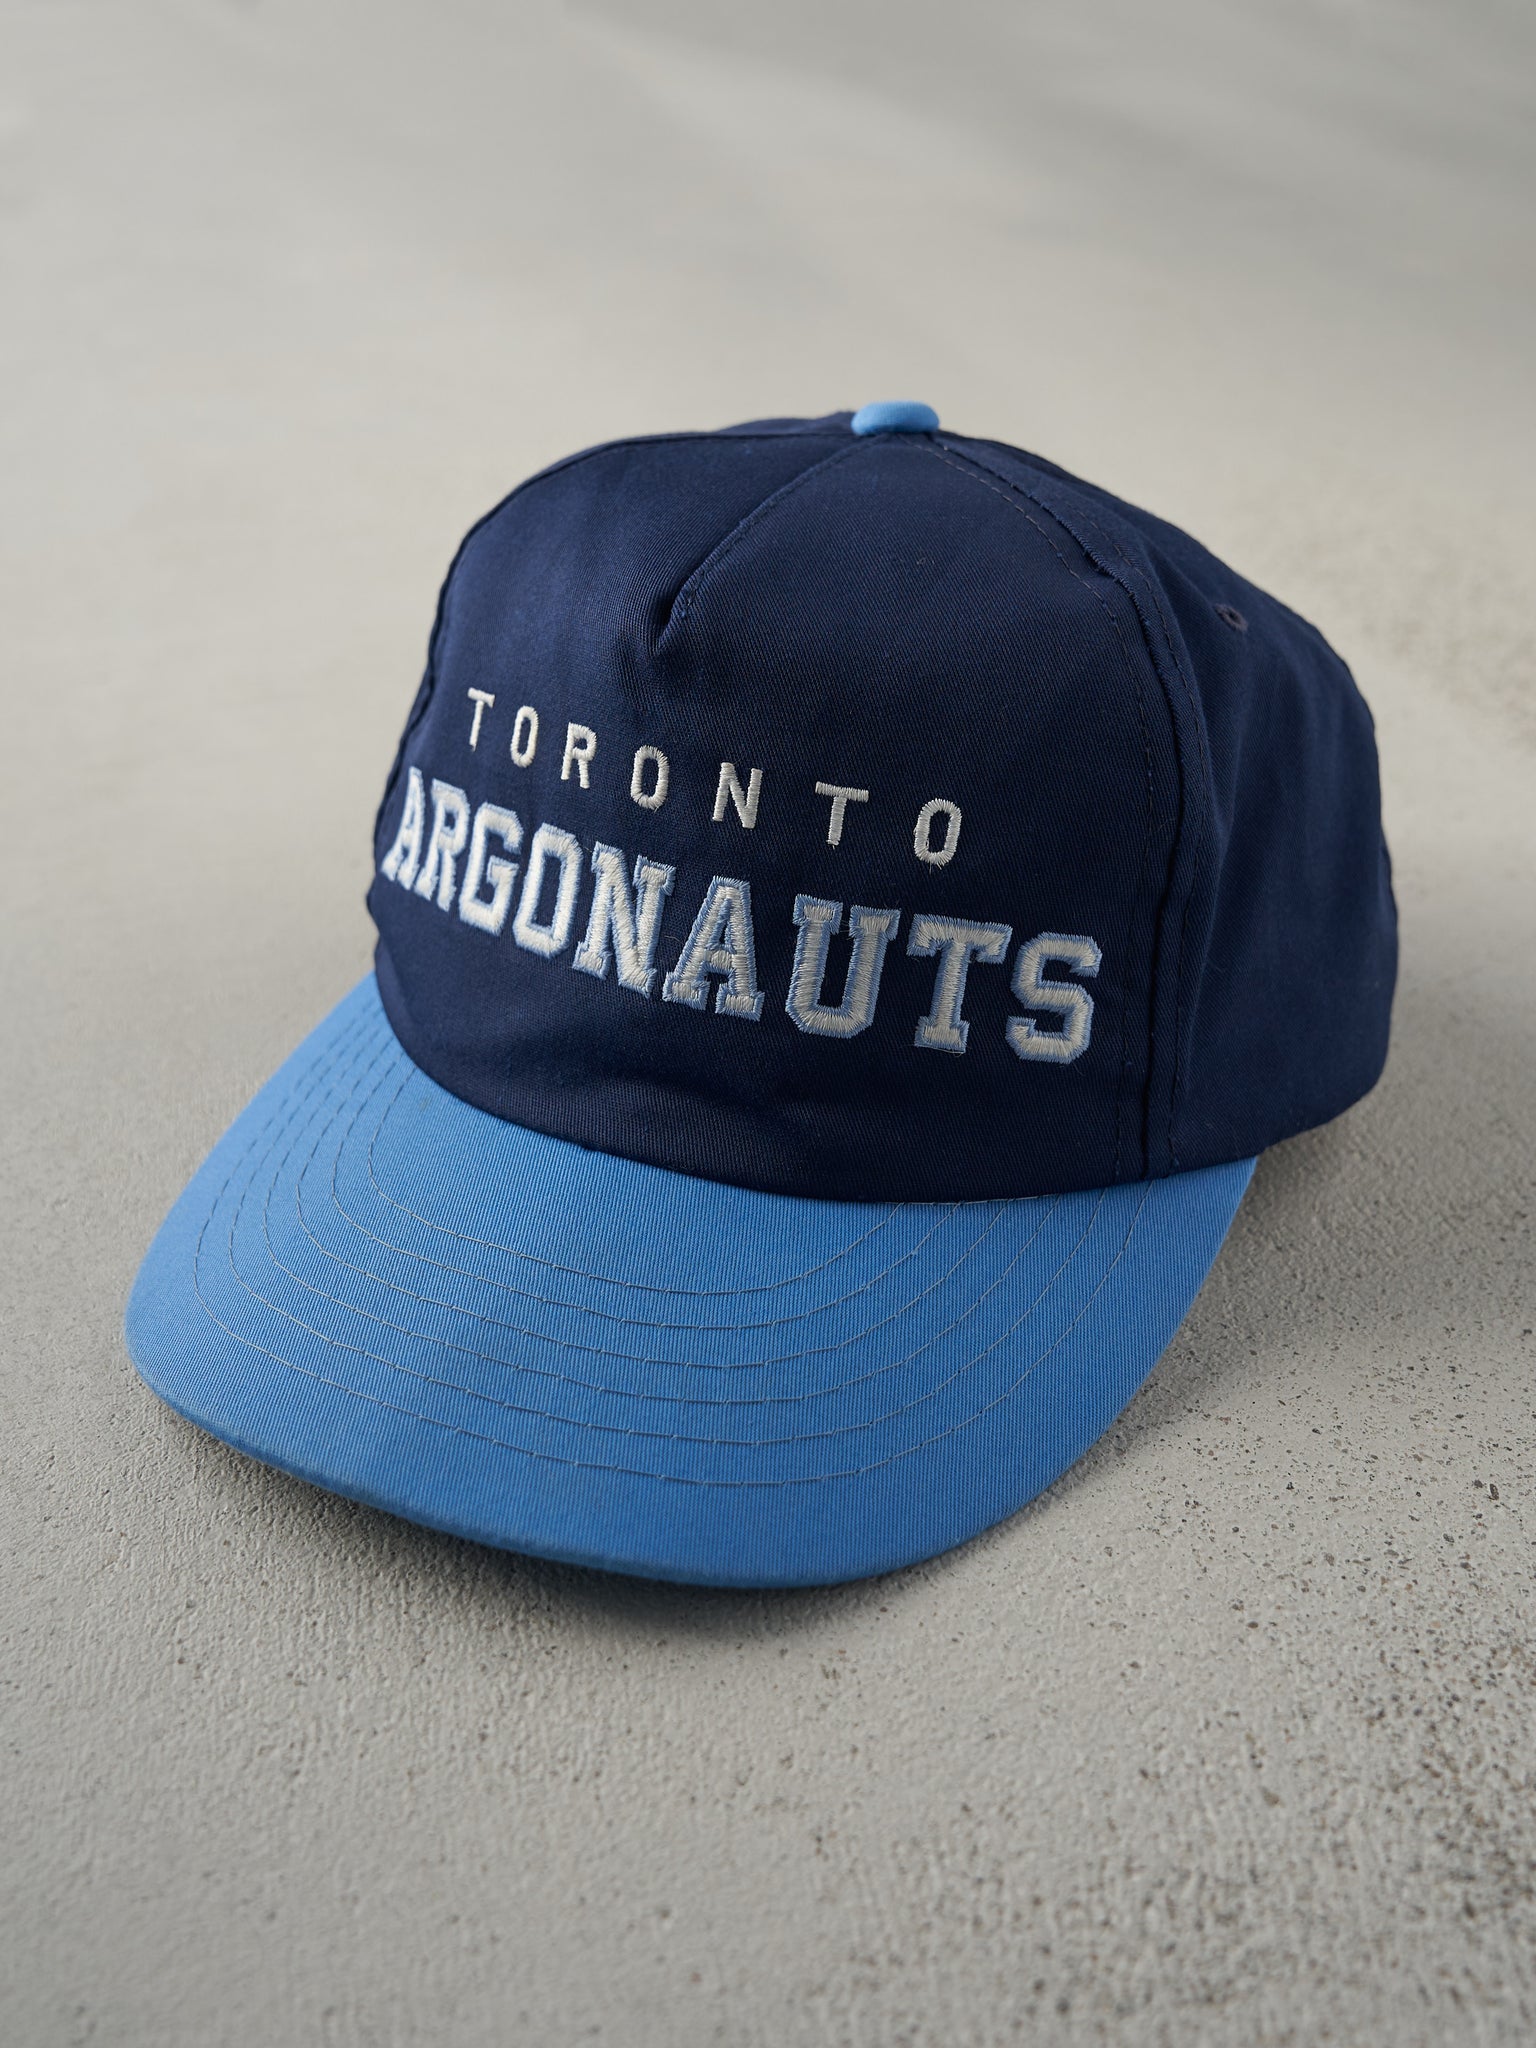 Vintage 90s Navy Toronto Argonauts Snapback Hat